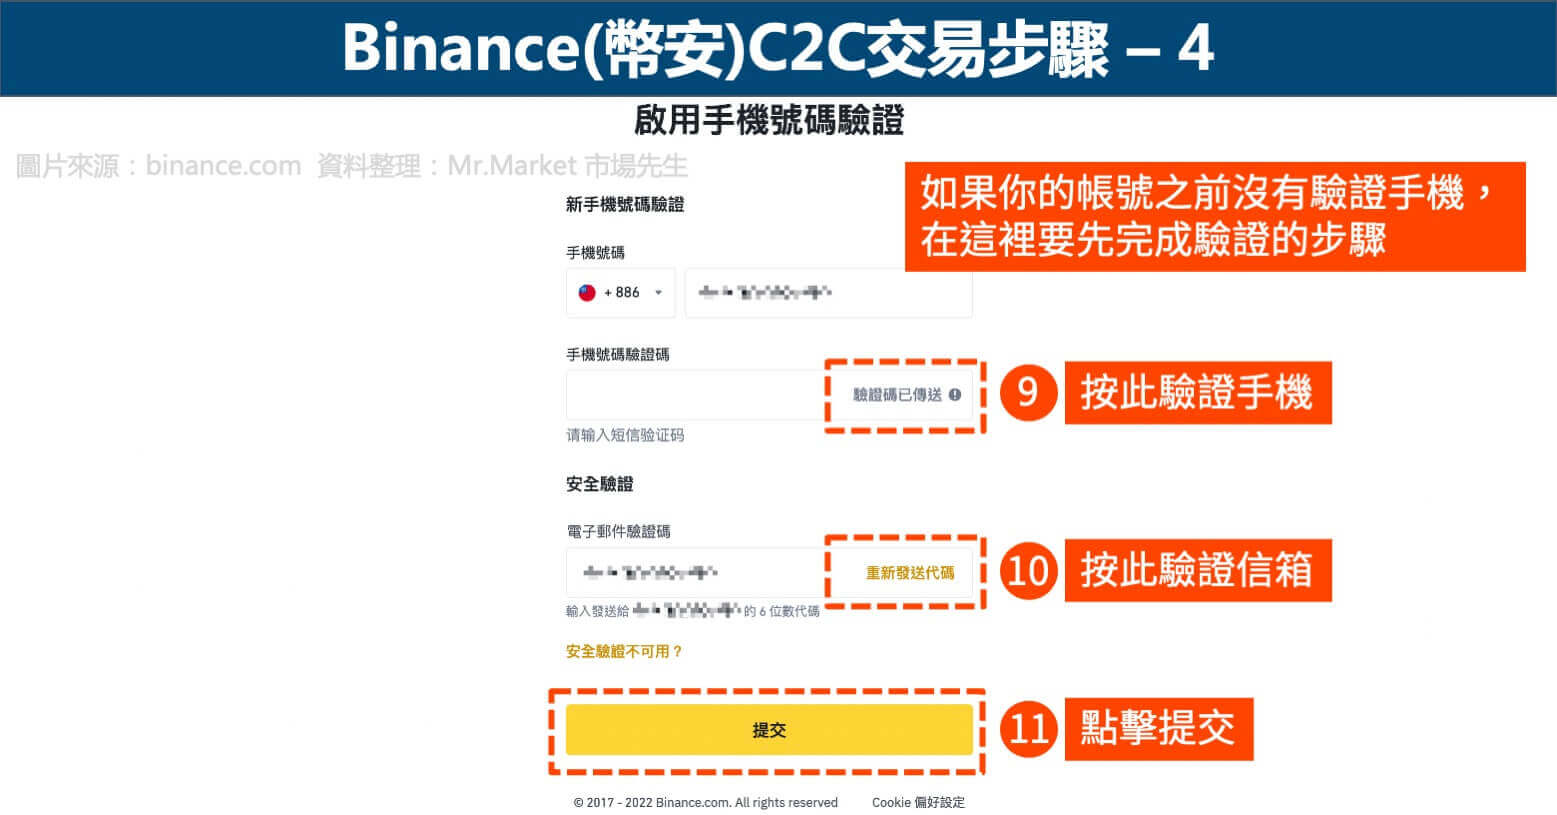 Binance(幣安)C2C交易步驟4